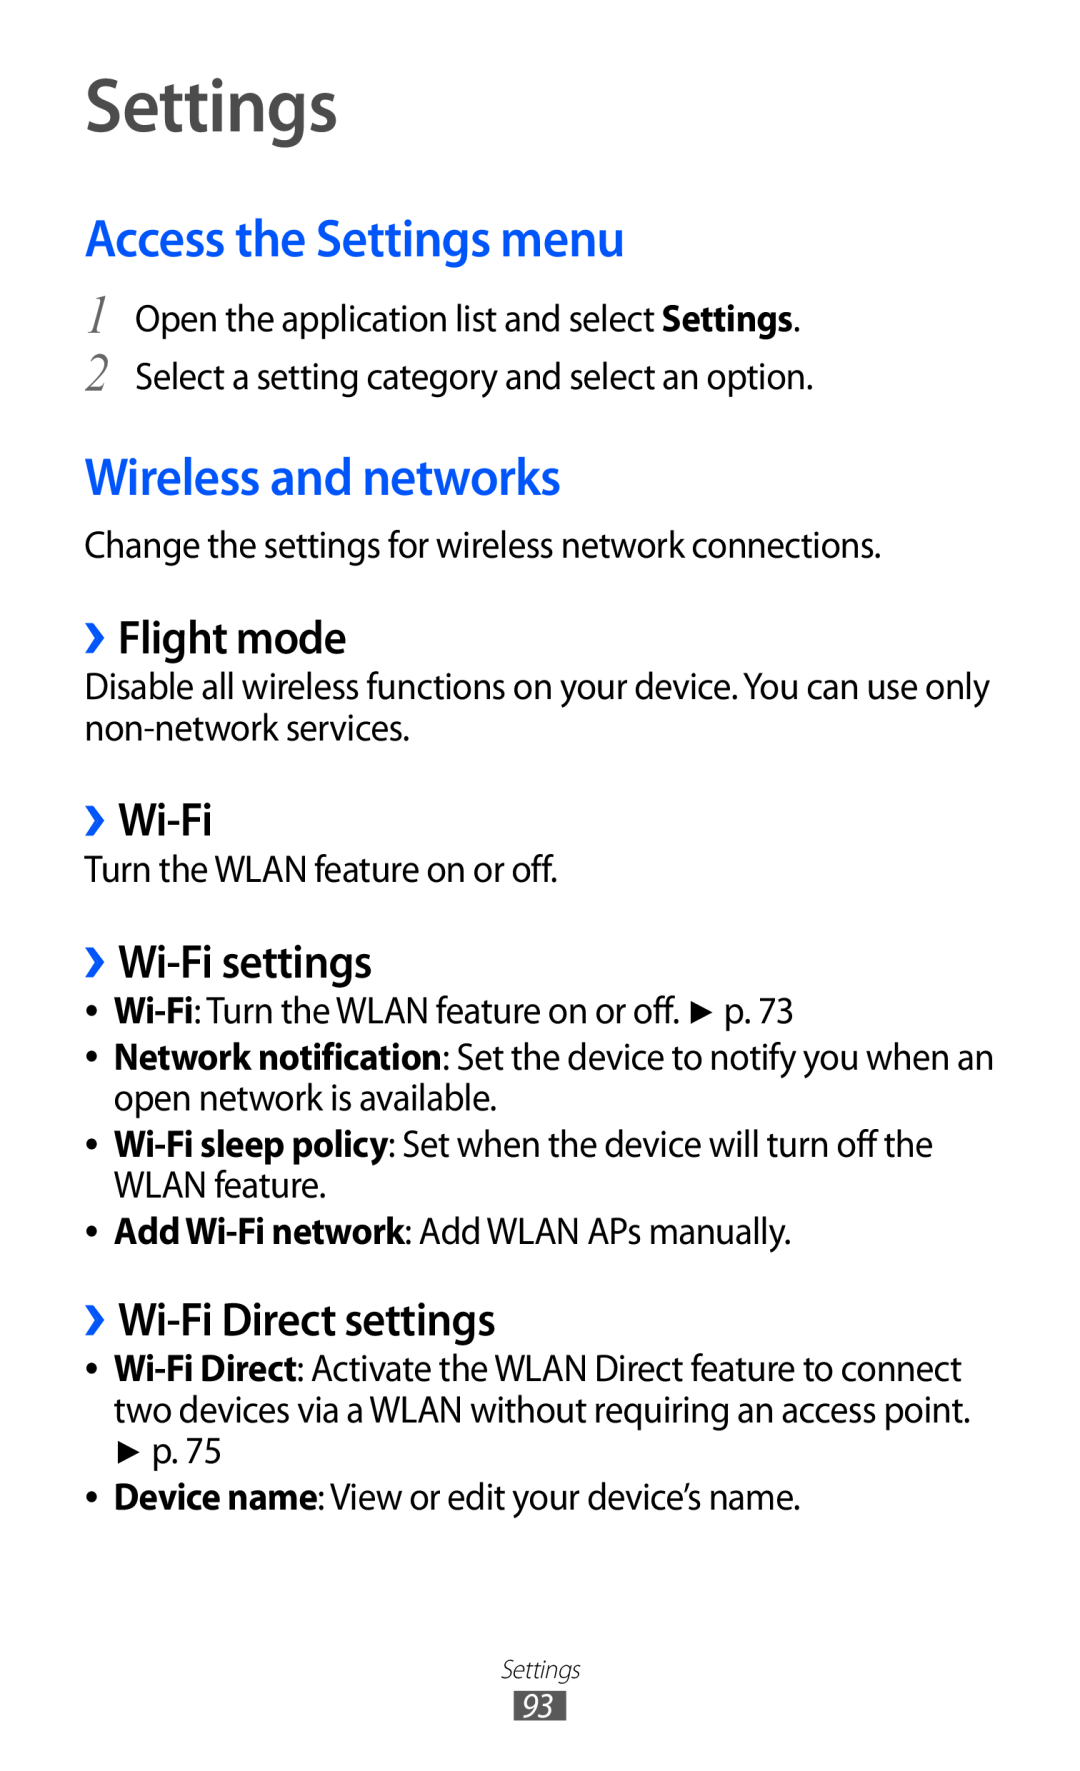 Samsung GT-P7310UWAITV manual Access the Settings menu, Wireless and networks, ››Flight mode, ››Wi-Fi settings 